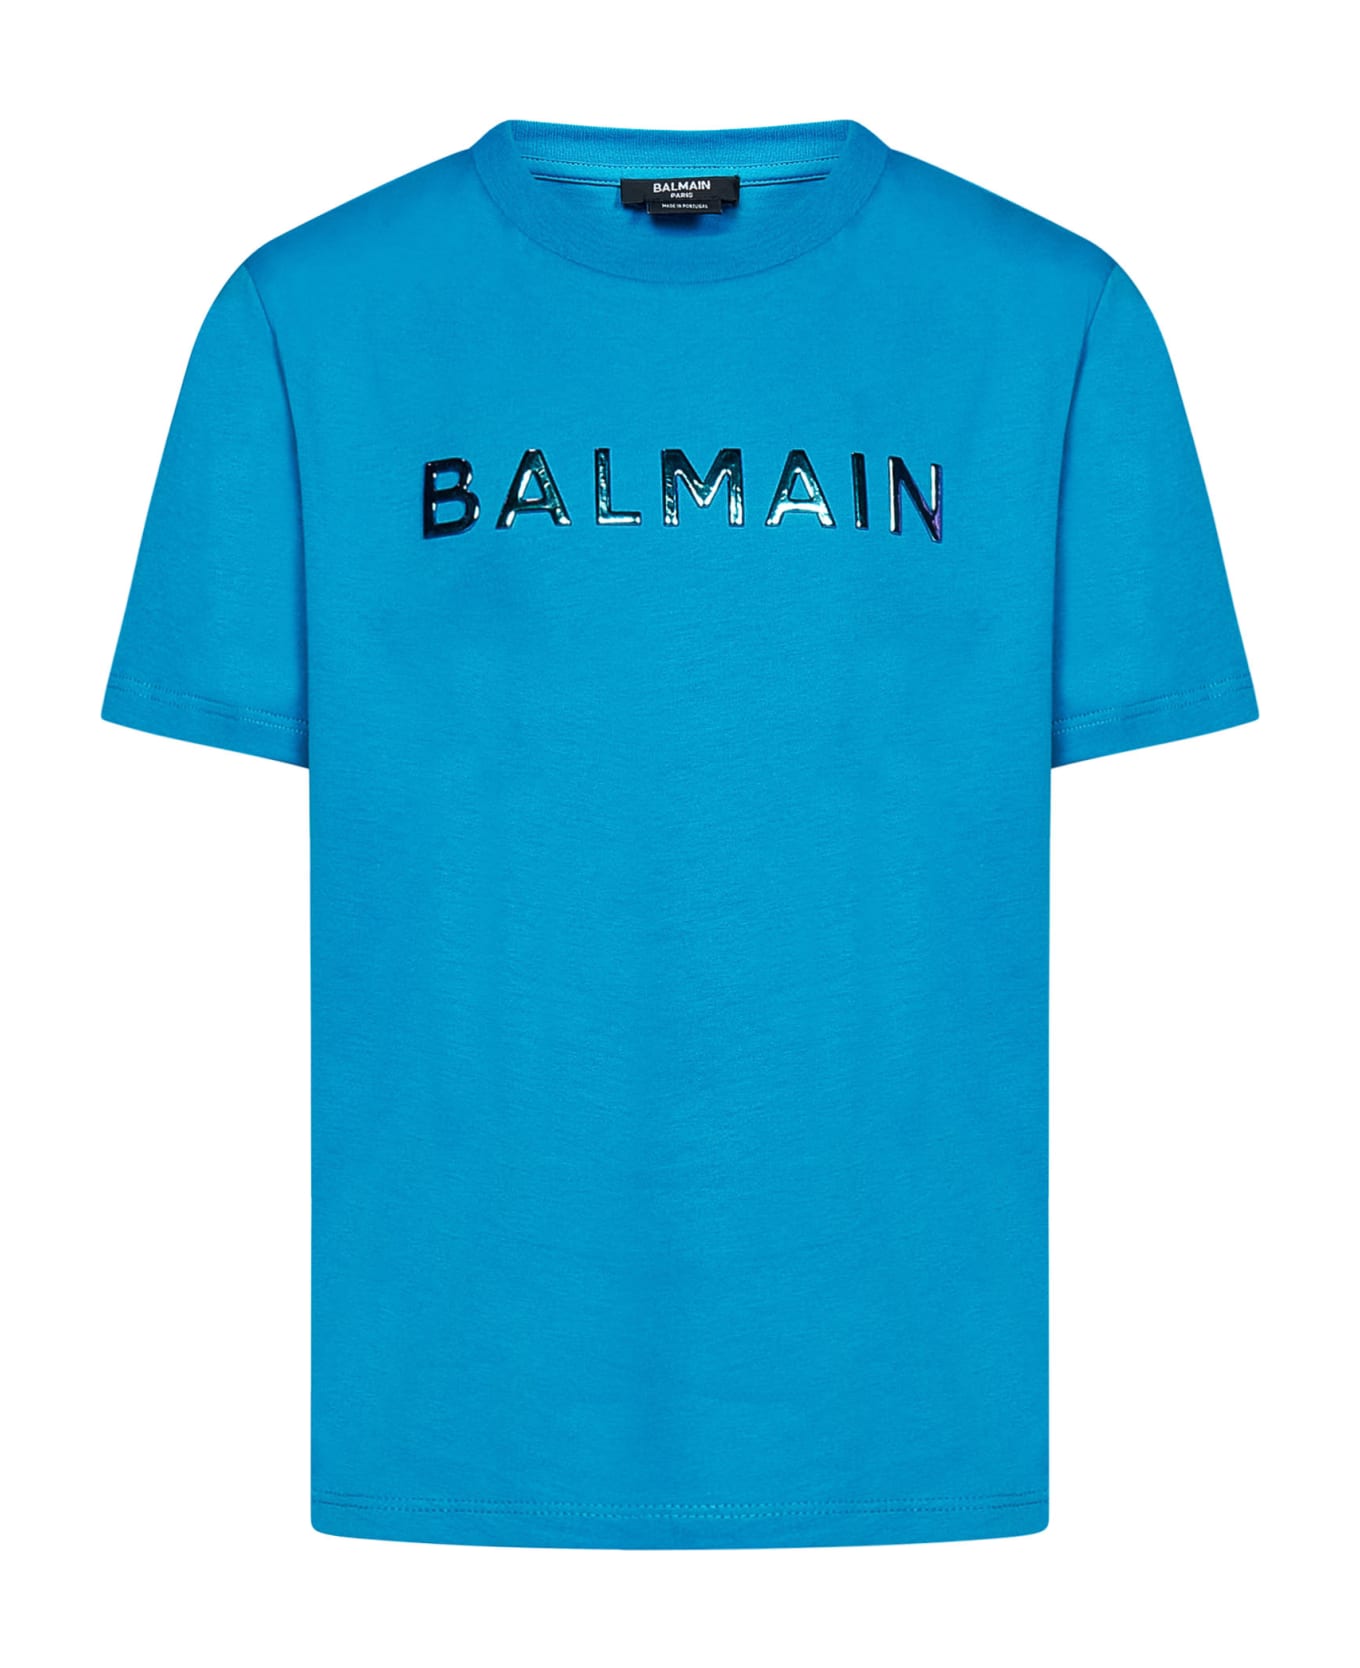 Balmain T-shirt - Blue